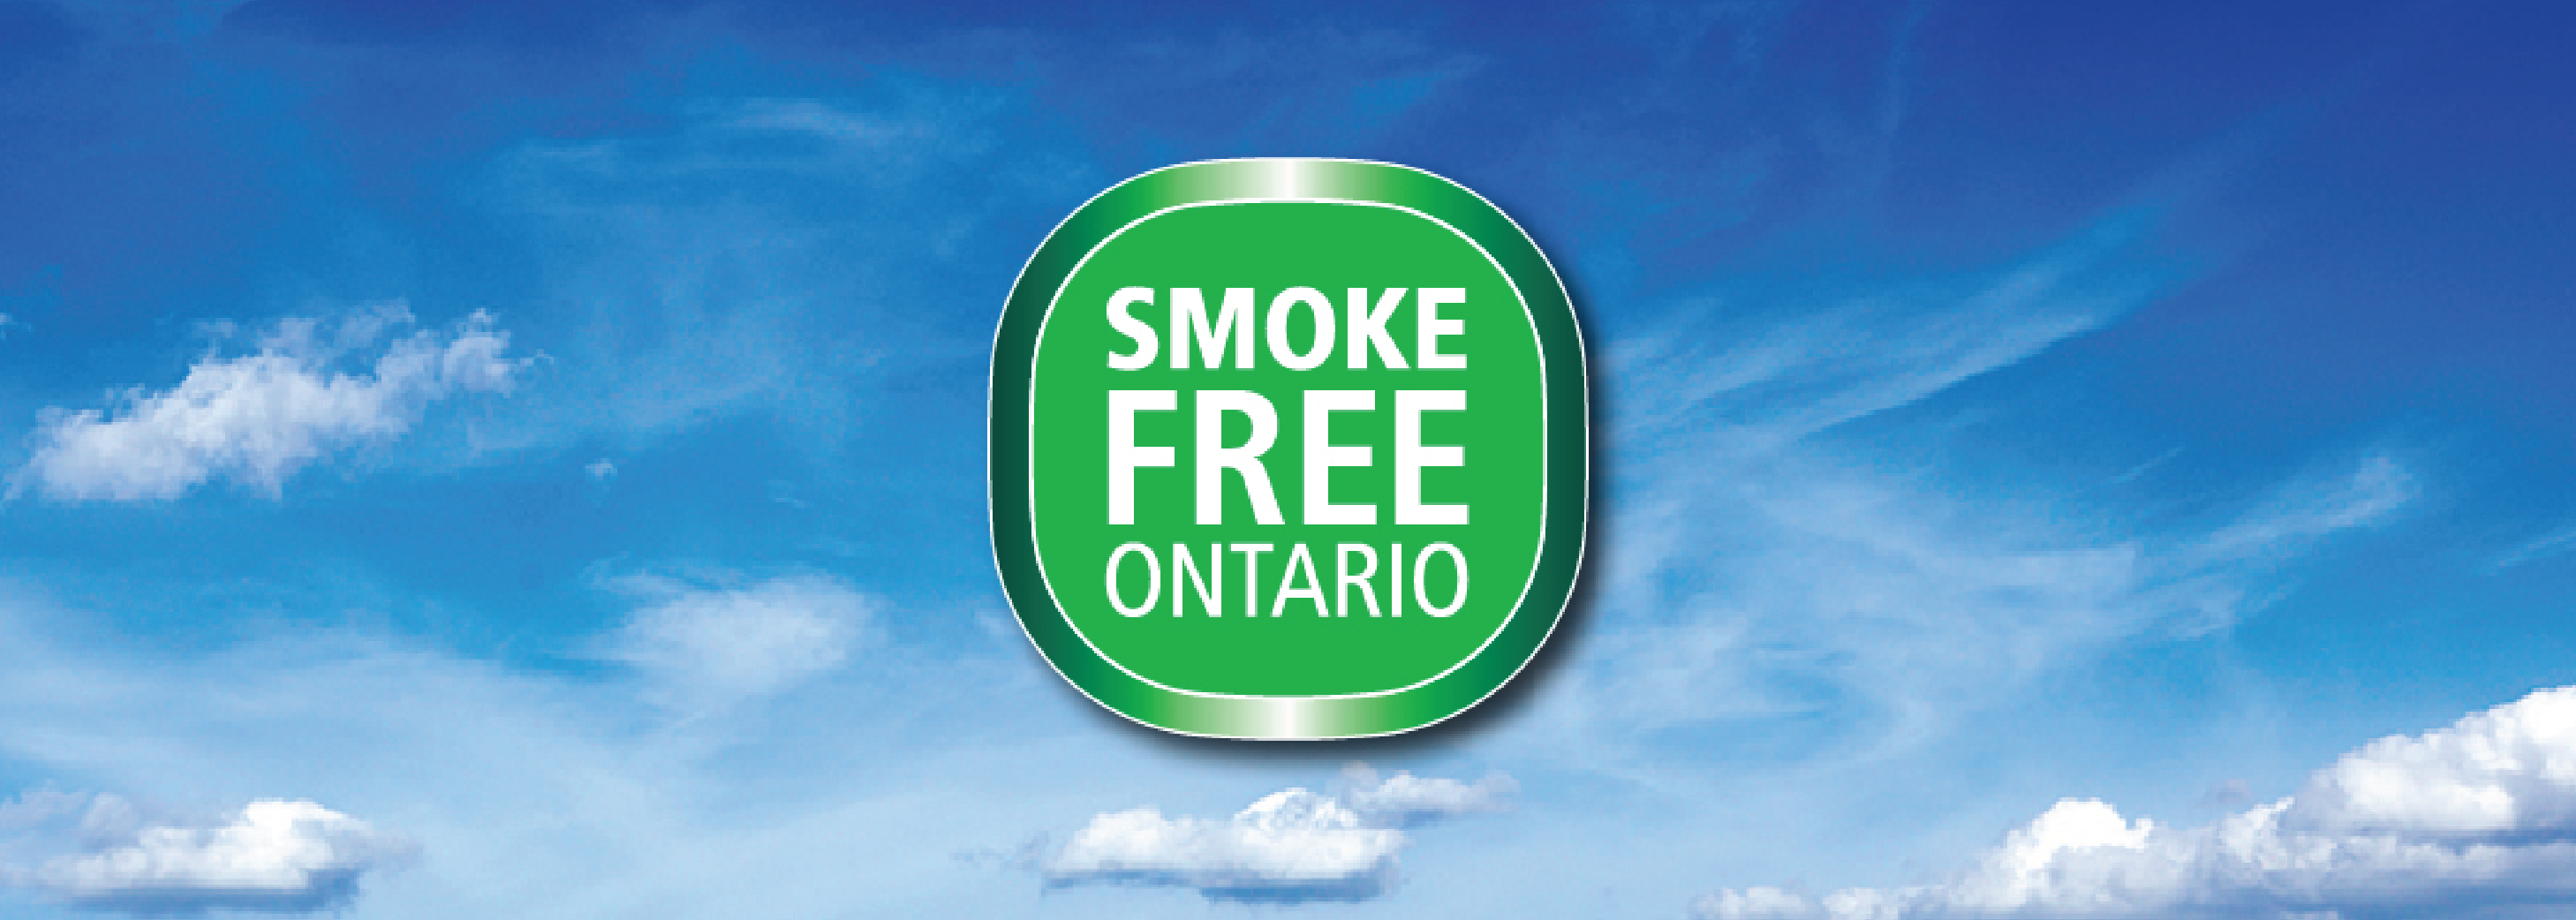 Smoke-Free Ontario logo on blue sky background